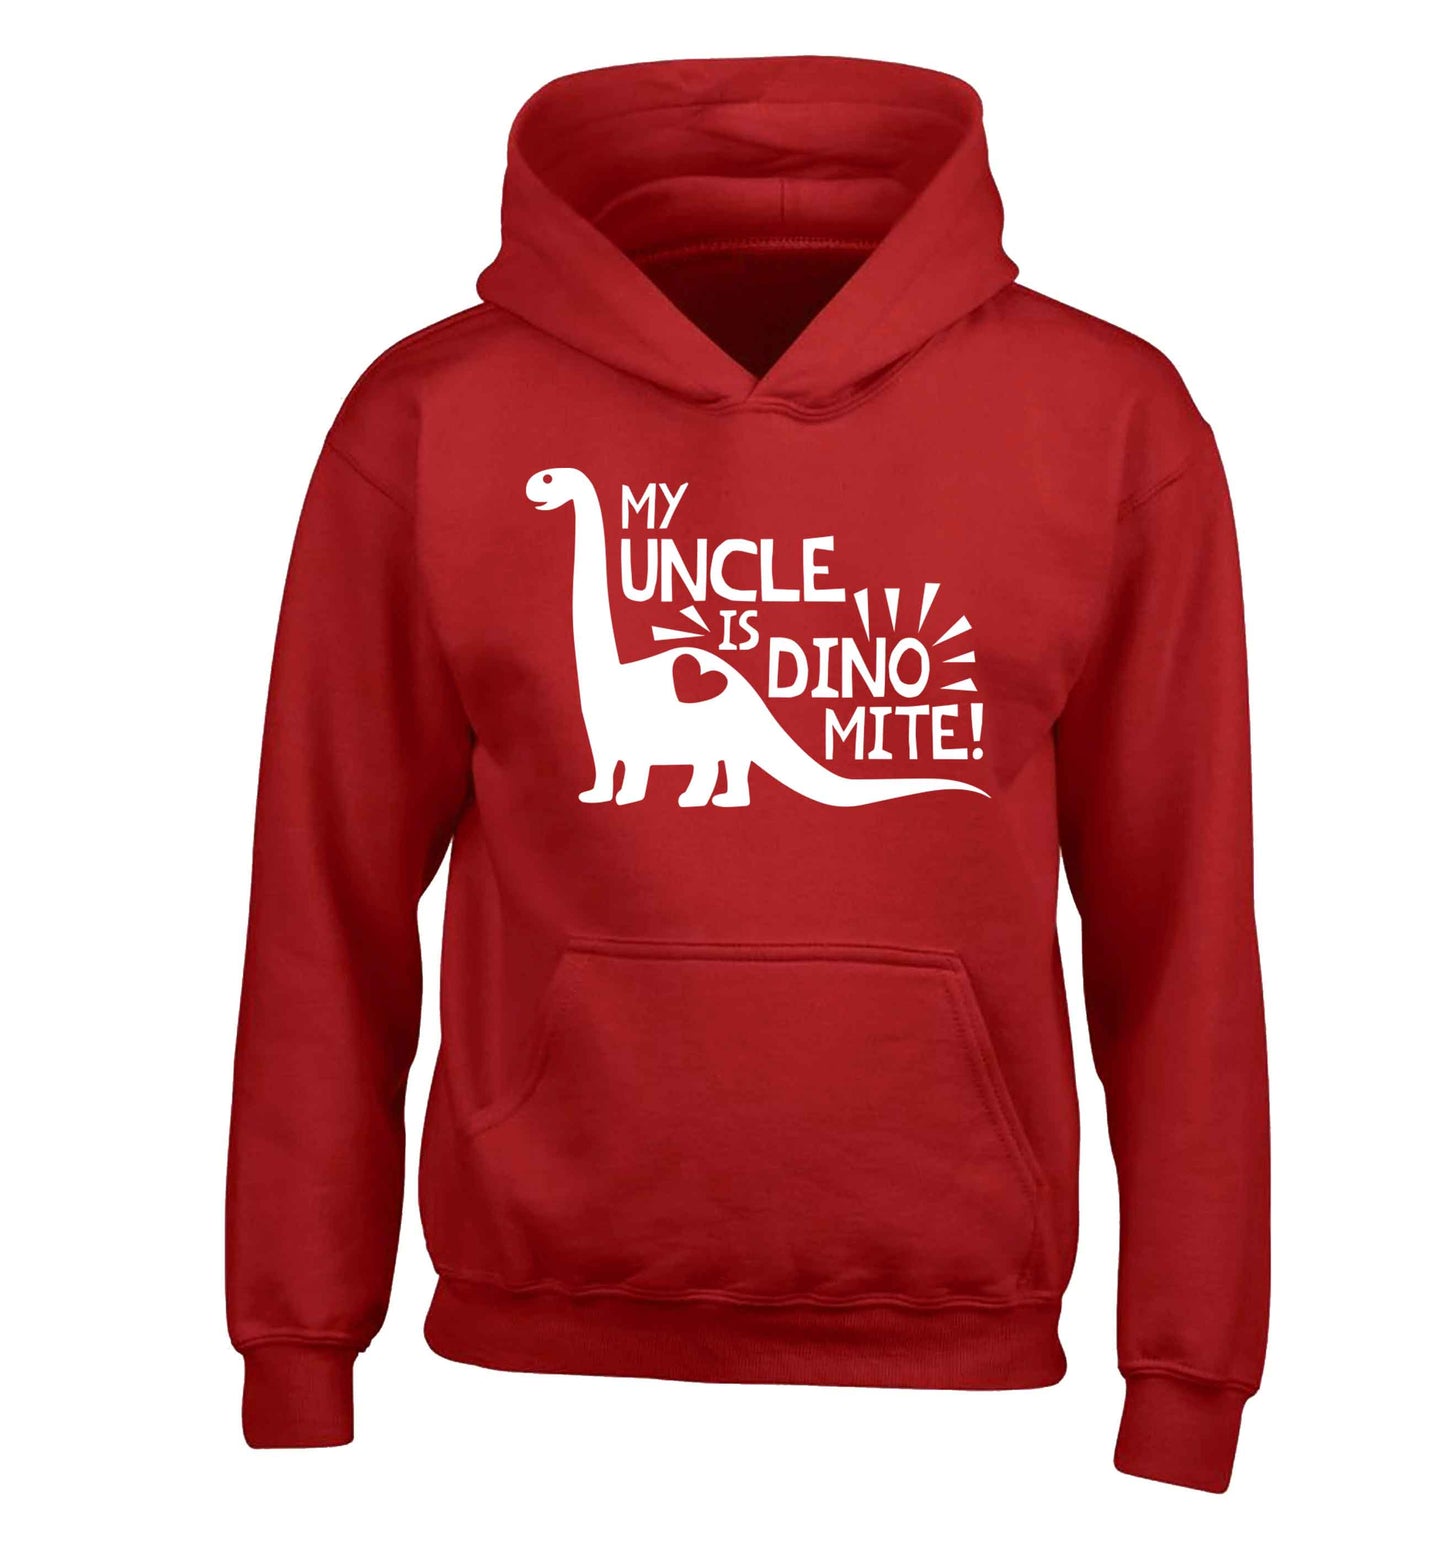 My uncle is dinomite! children's red hoodie 12-13 Years